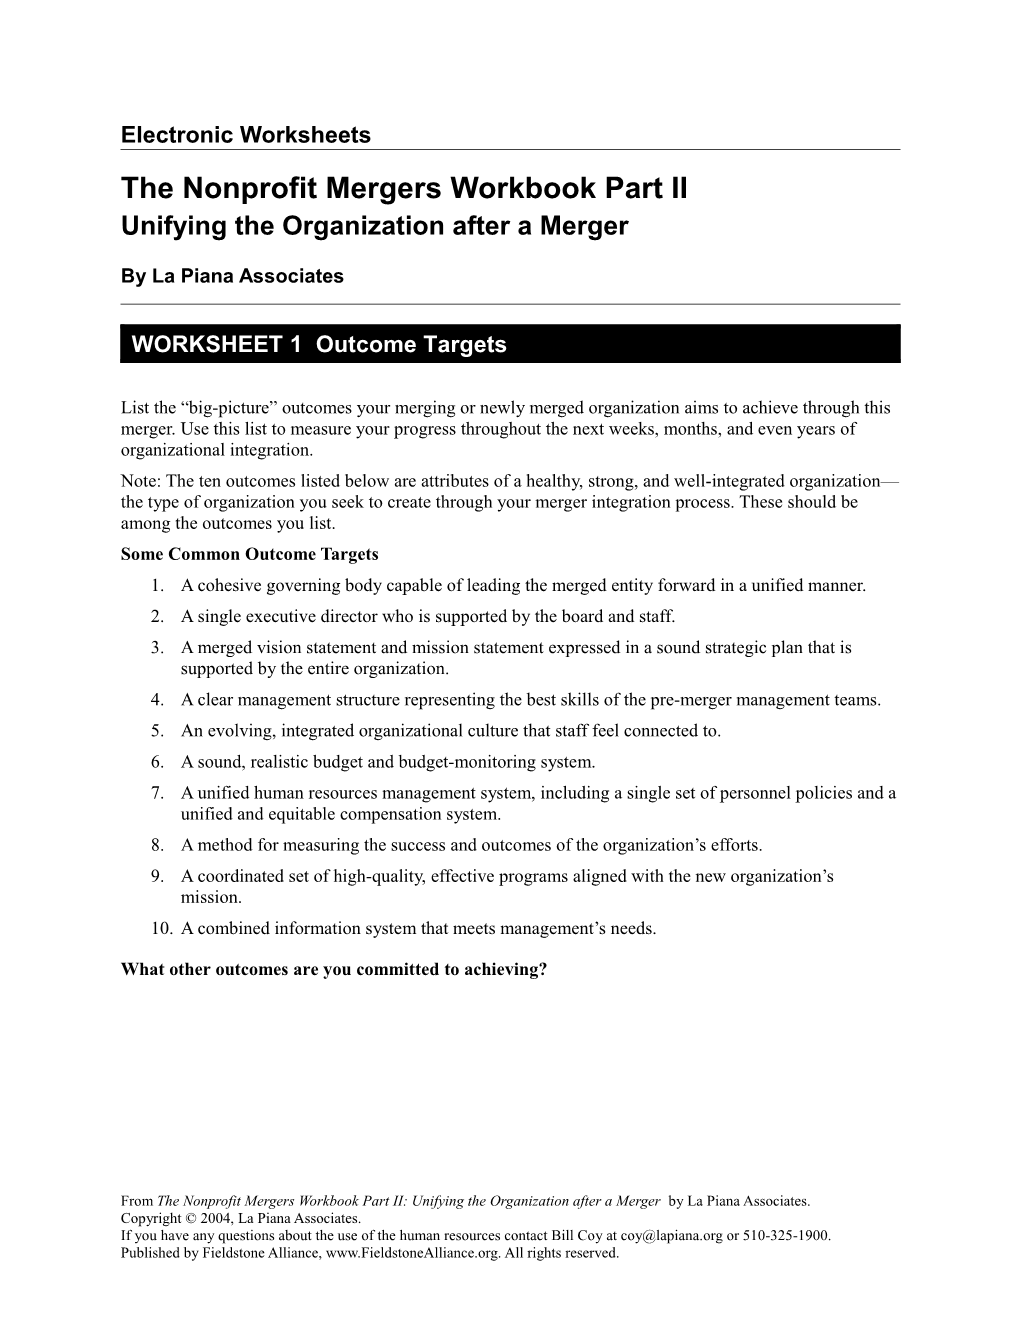 The Nonprofit Mergers Workbook Part II